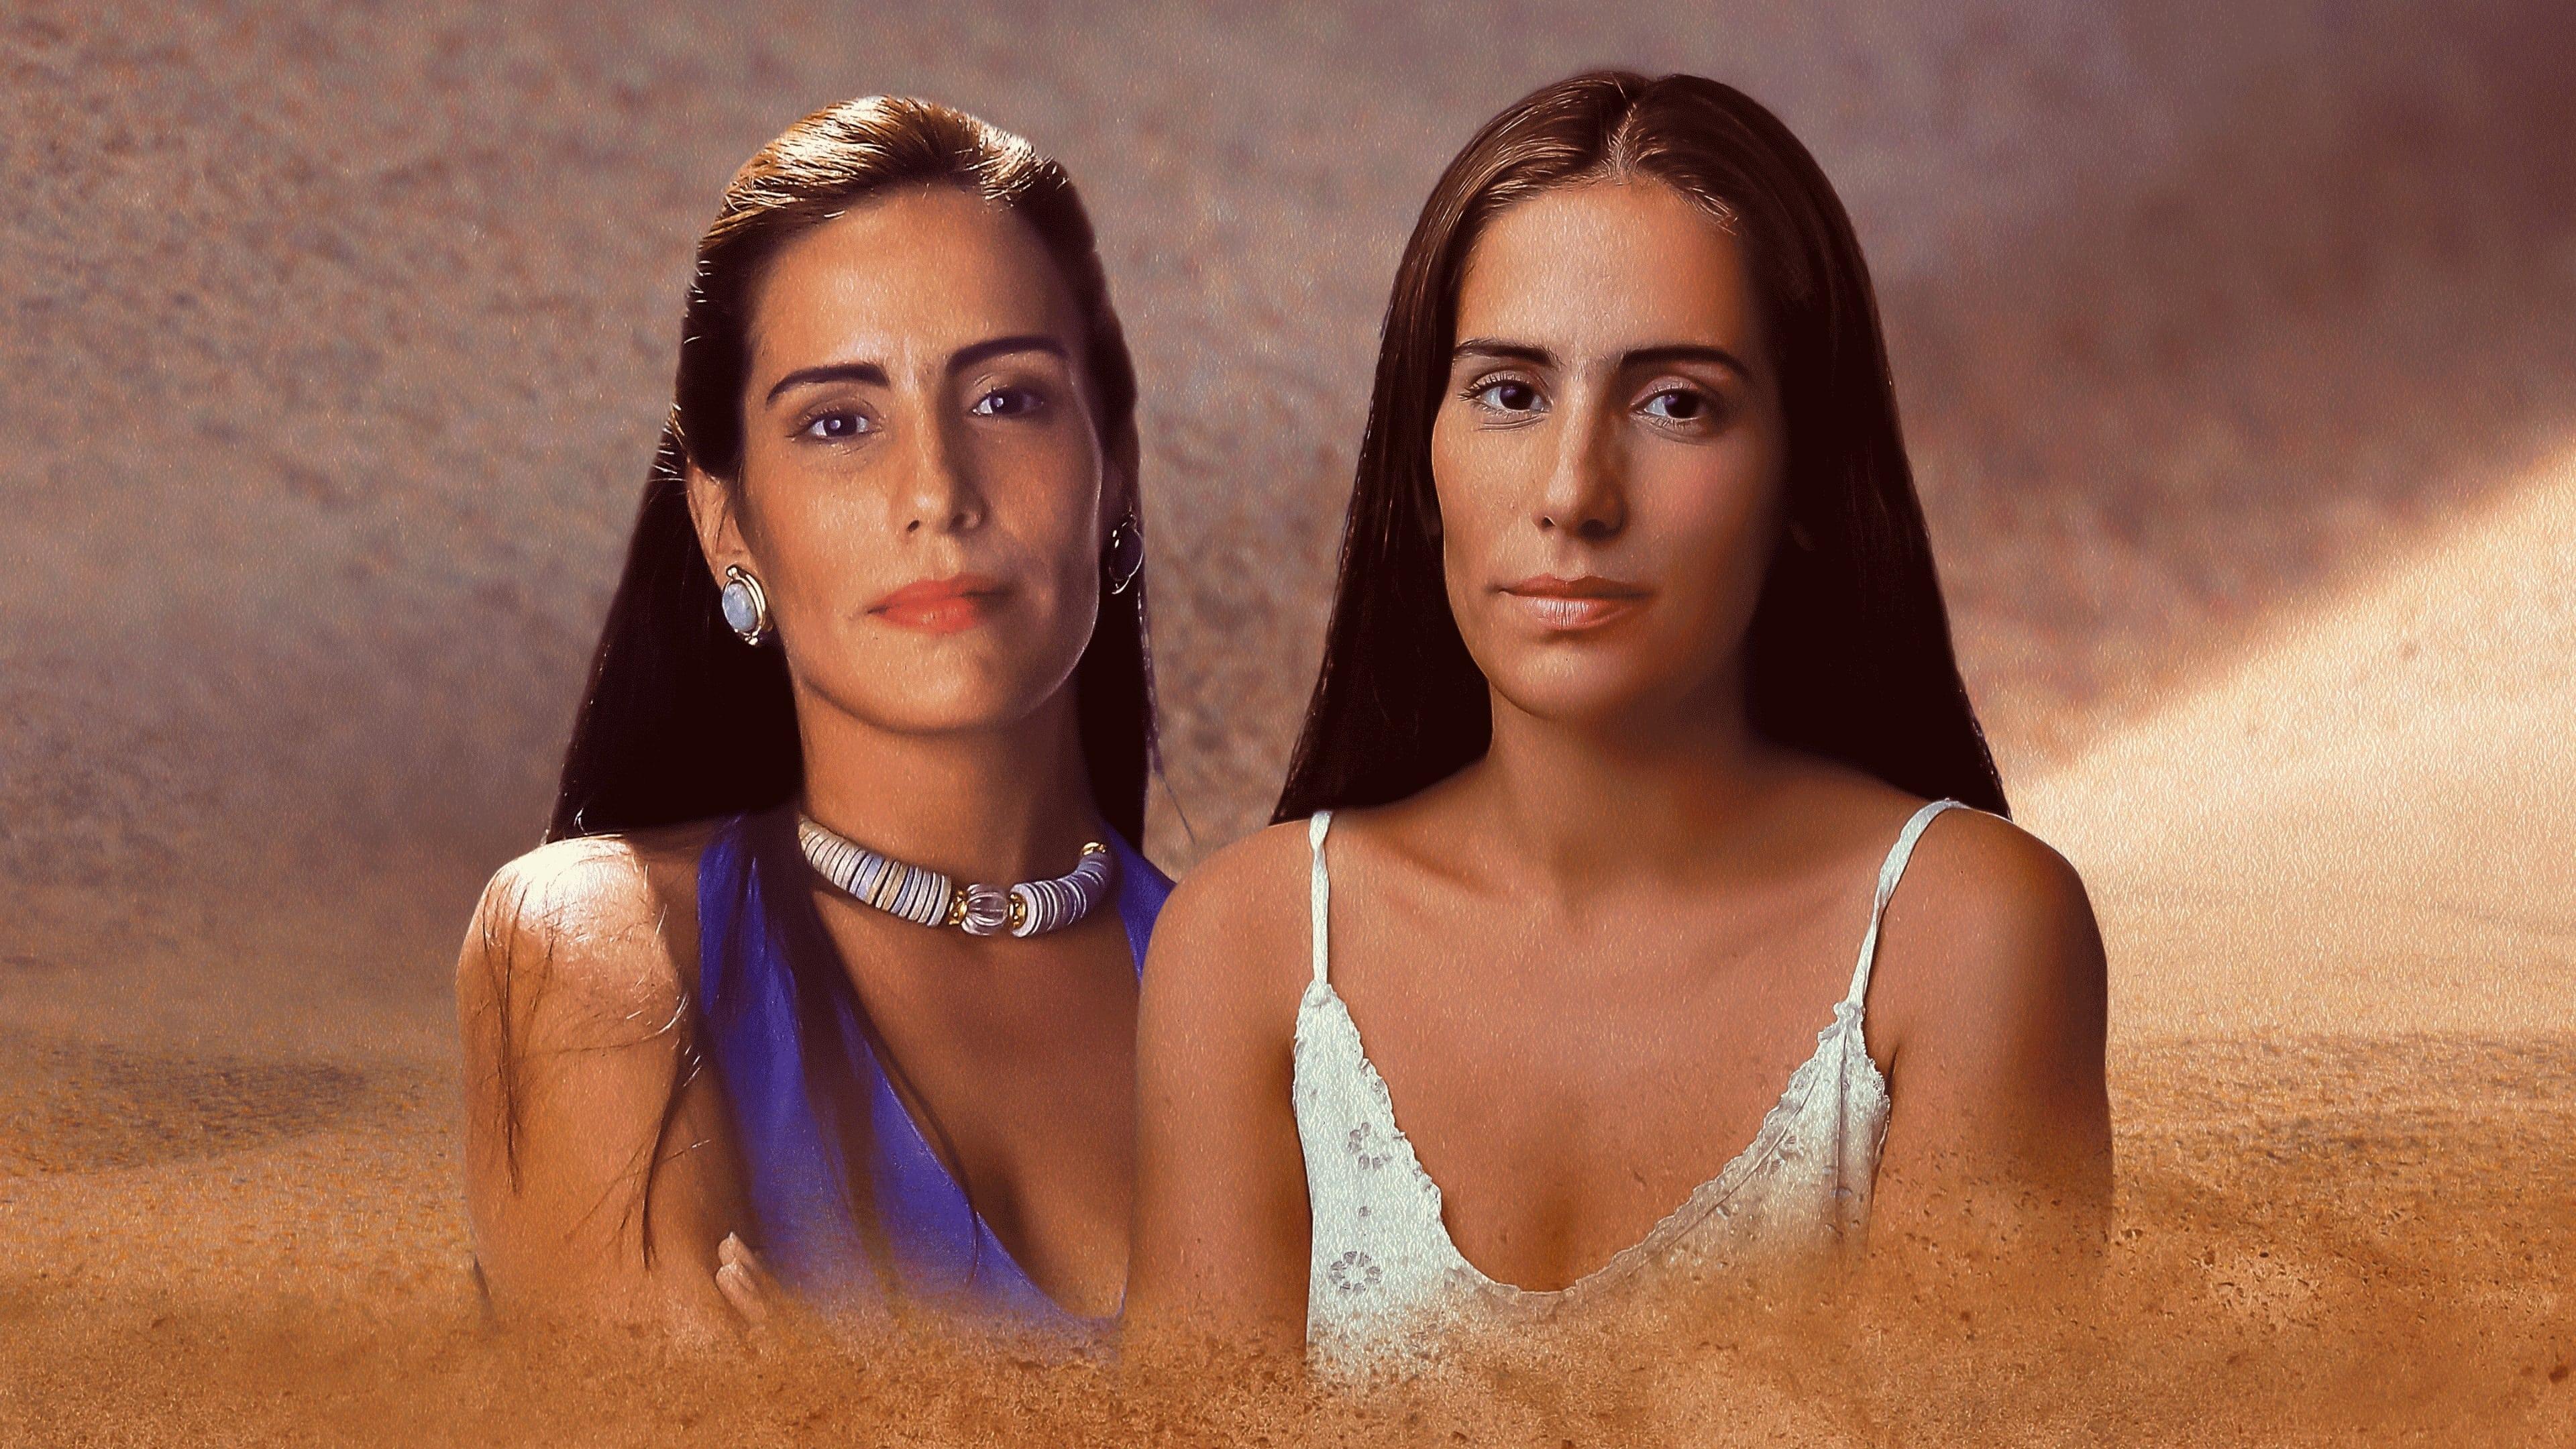 Mulheres de Areia backdrop